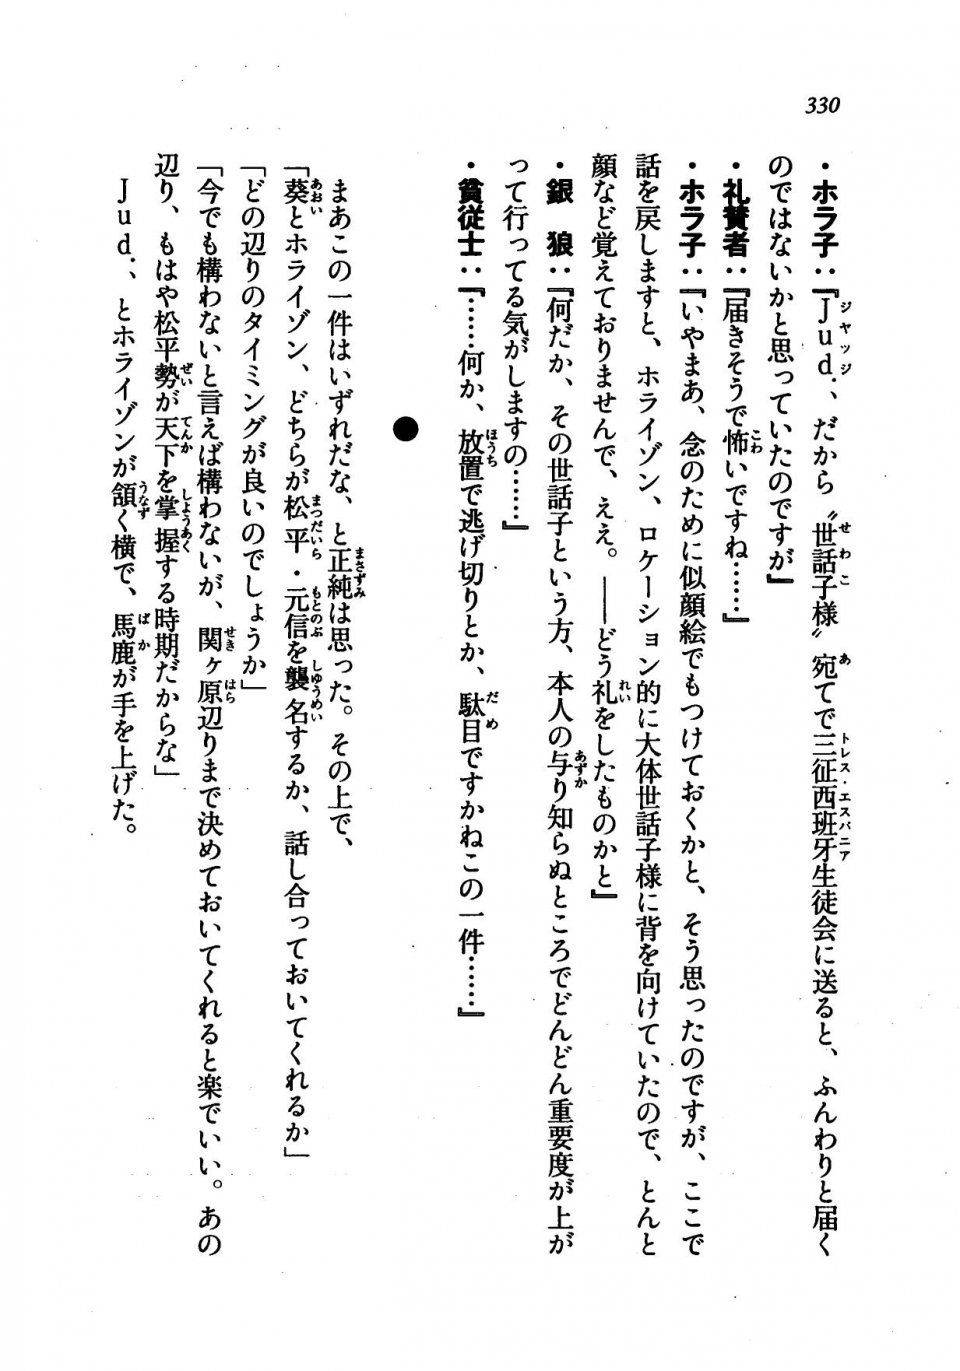 Kyoukai Senjou no Horizon LN Vol 21(8C) Part 1 - Photo #329